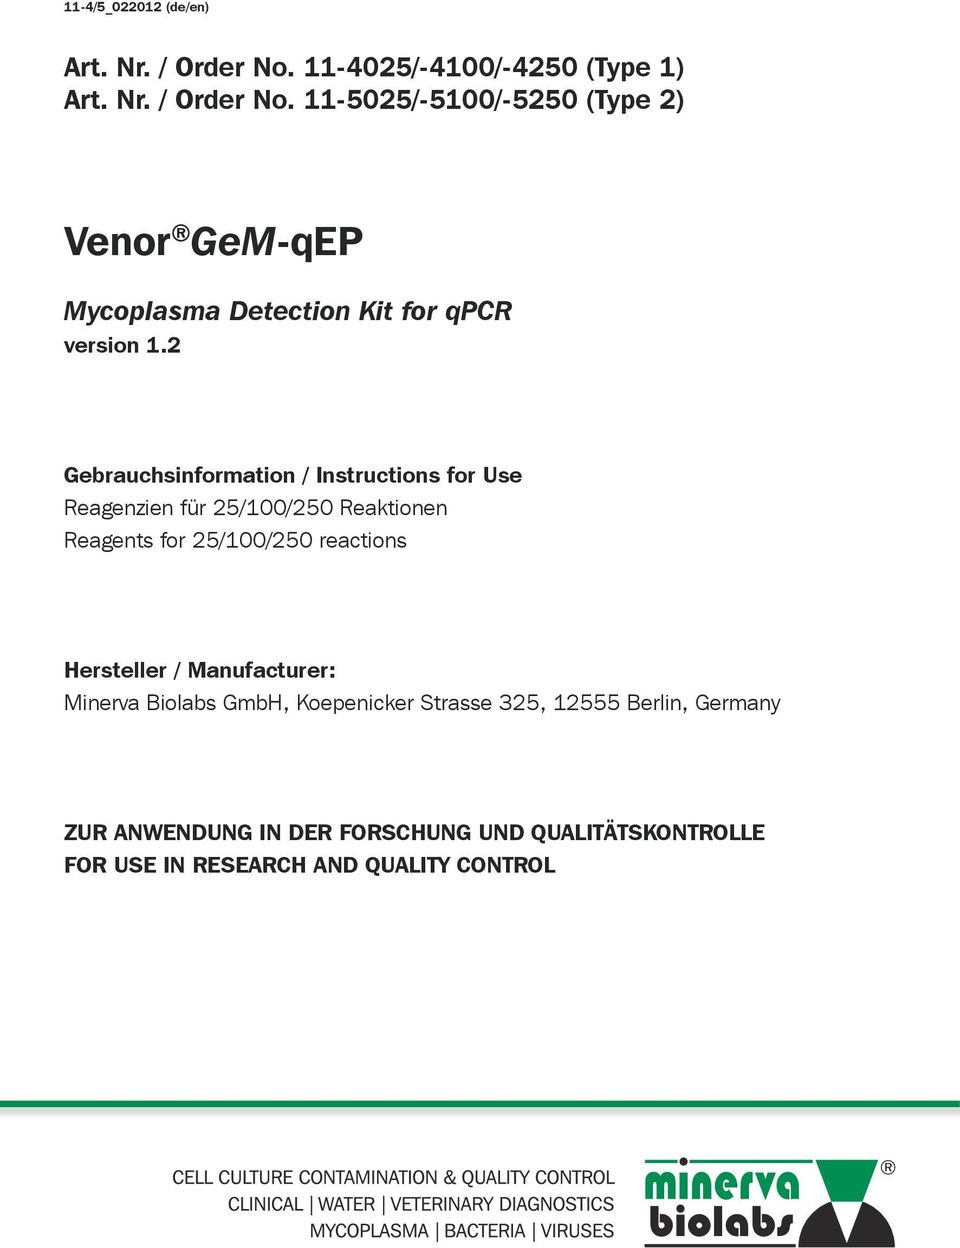 11-5025/-5100/-5250 (Type 2) Venor GeM-qEP Mycoplasma Detection Kit for qpcr version 1.